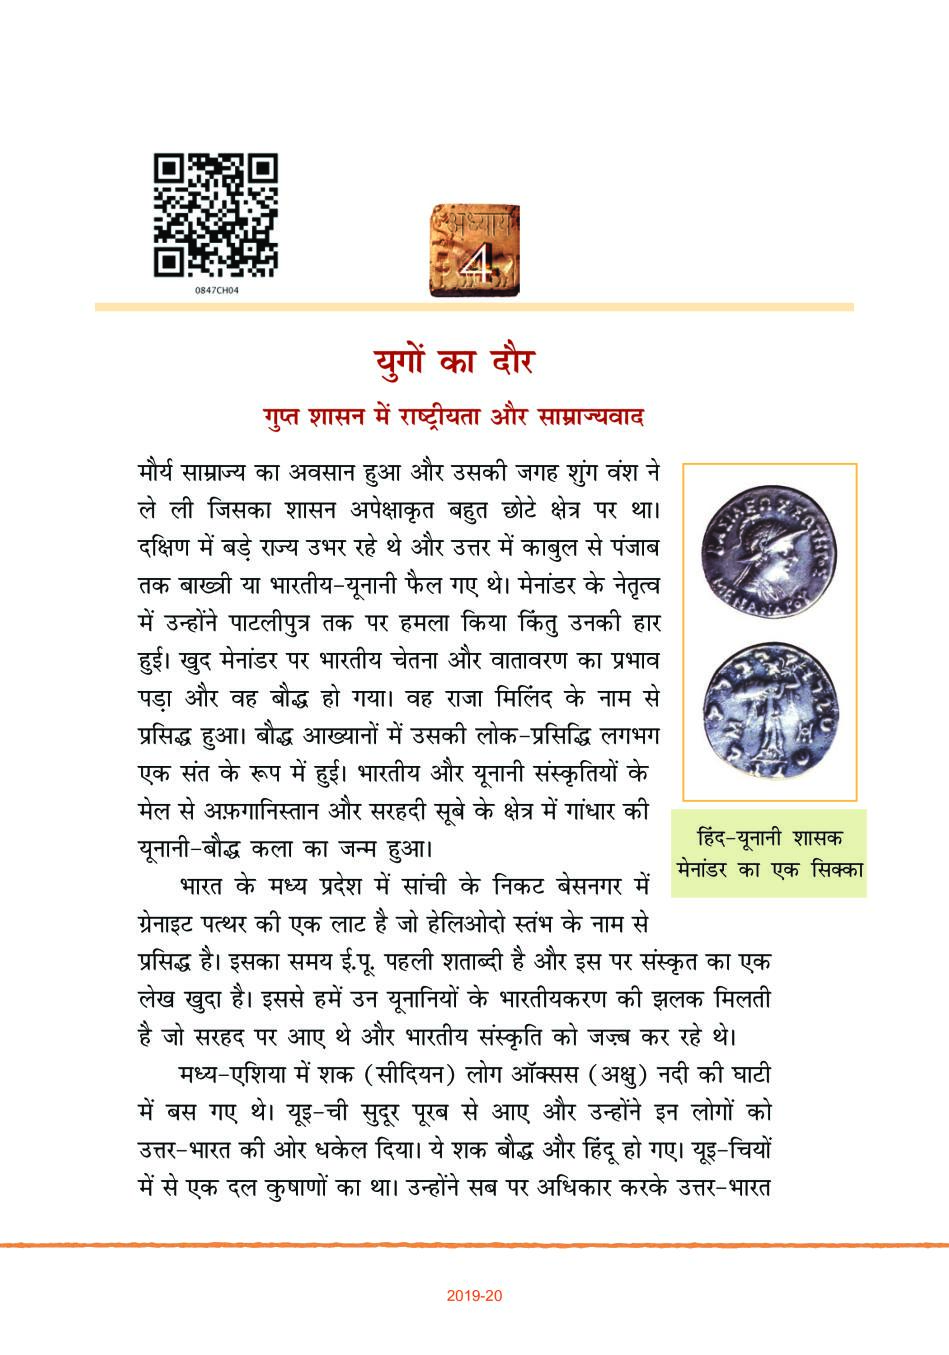 NCERT Book Class 8 Hindi (भारत की खोज) Chapter 4 युगों का दौर - Page 1